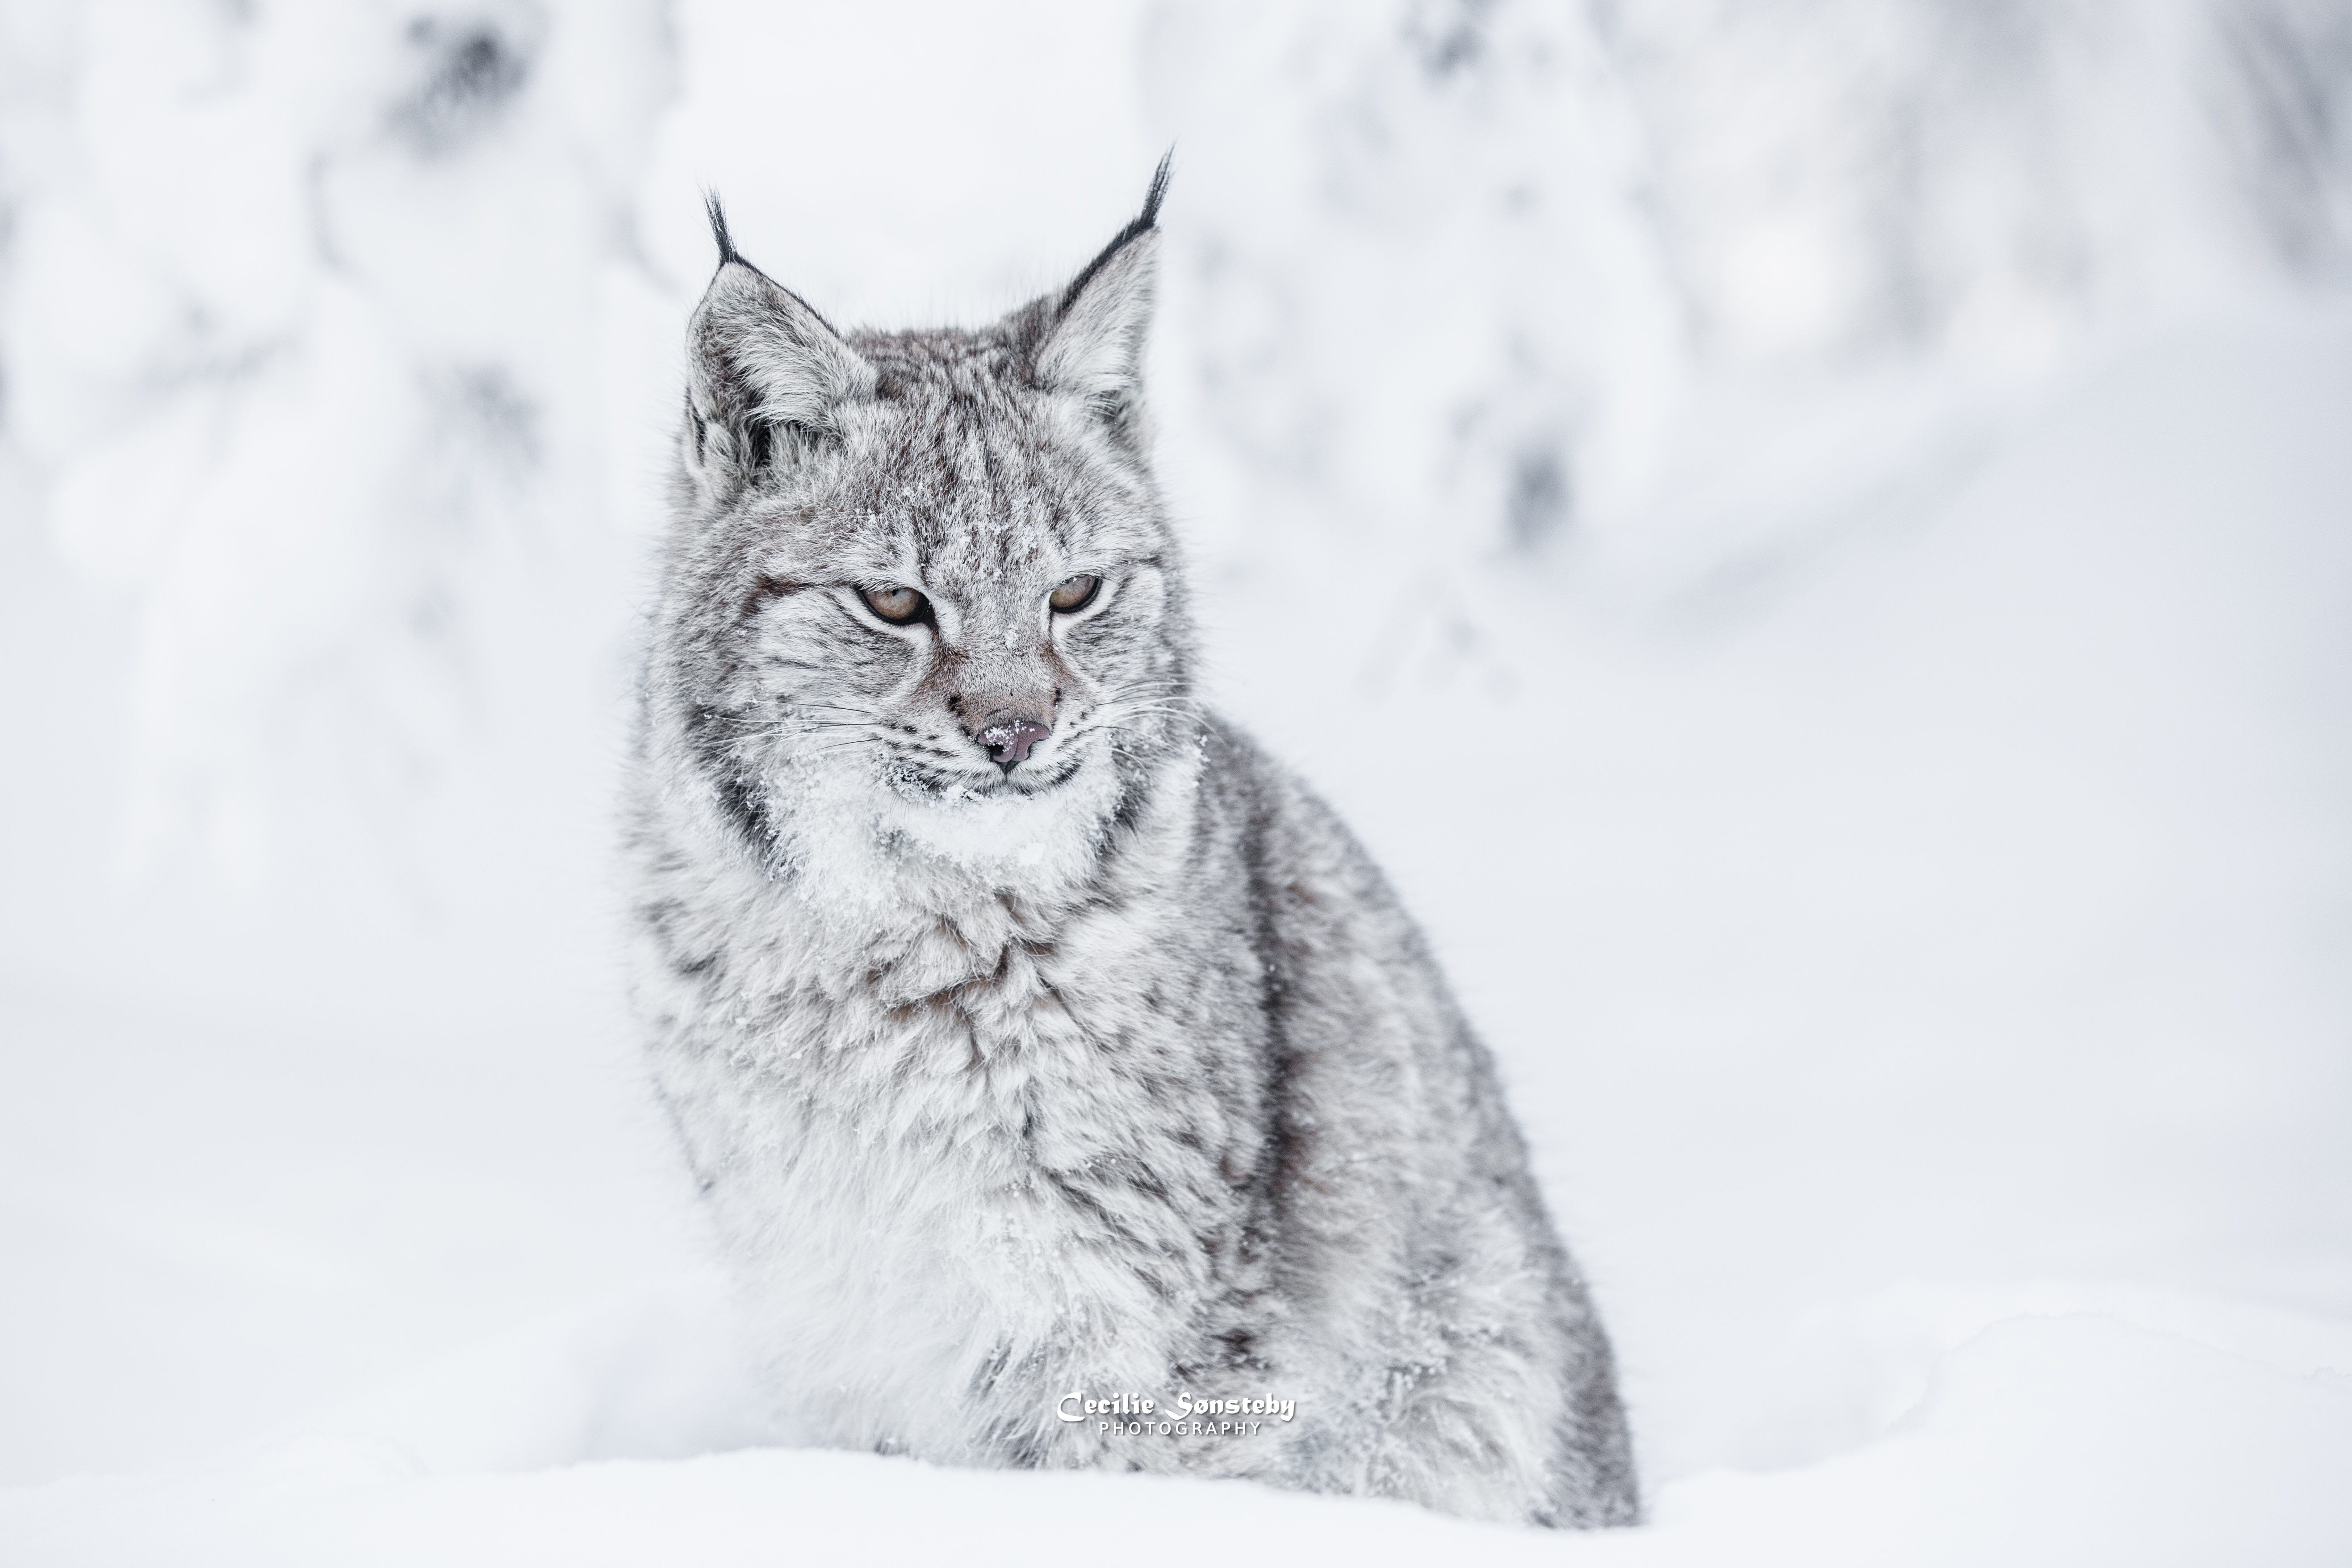 Image: Lynx, cat, predator, winter, snow, photography, Cecilie Sønsteby